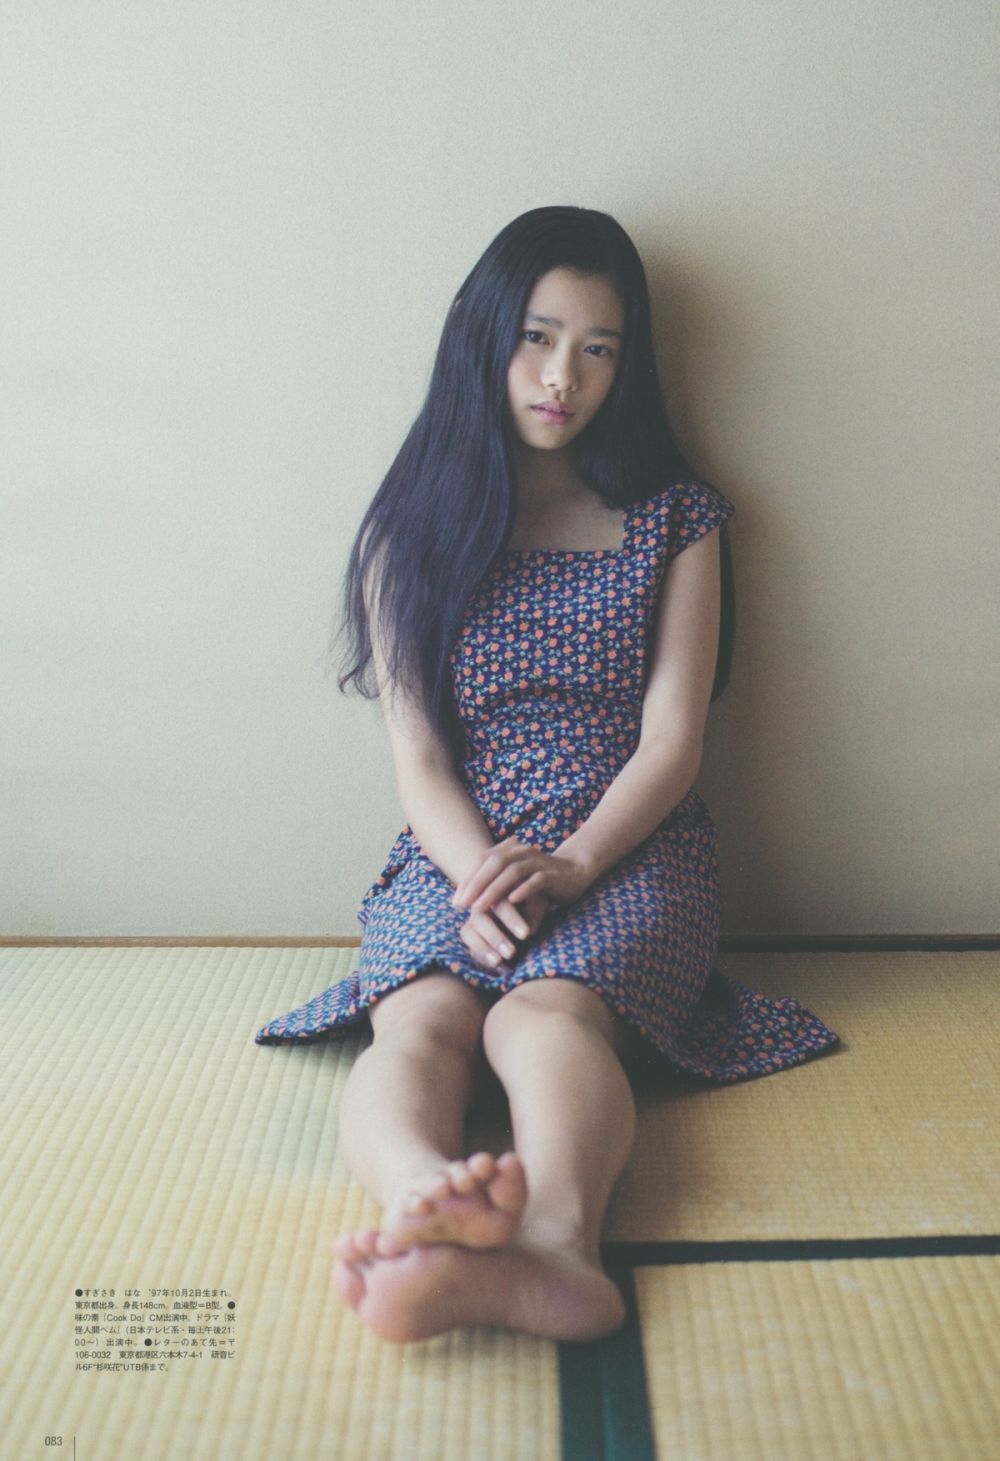 Hana Sugisaki Sexy and Hottest Photos , Latest Pics